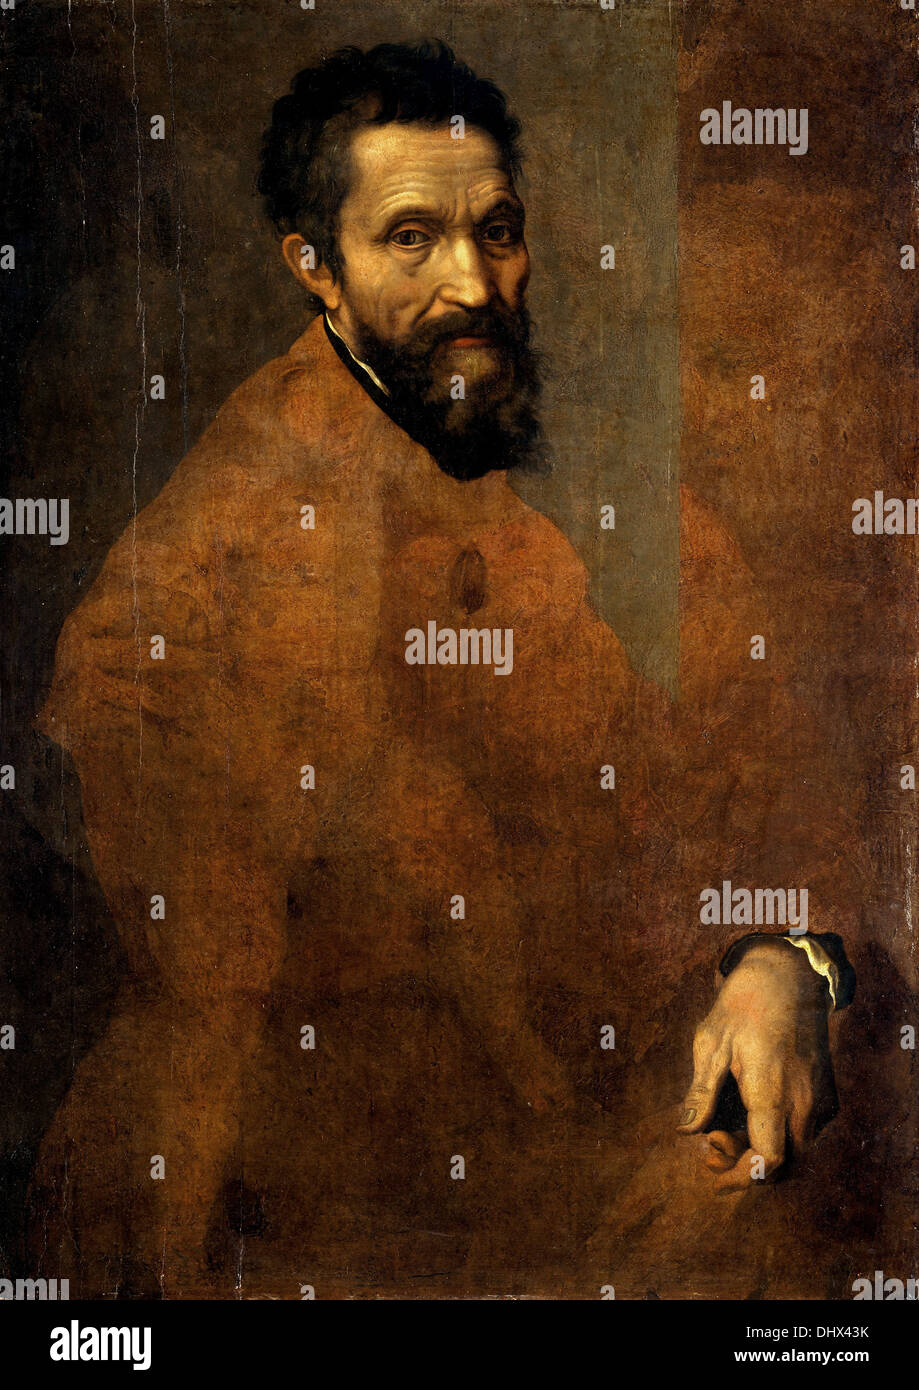 The Creation of Adam - by Michelangelo Buonarroti, 1512 Stock Photo